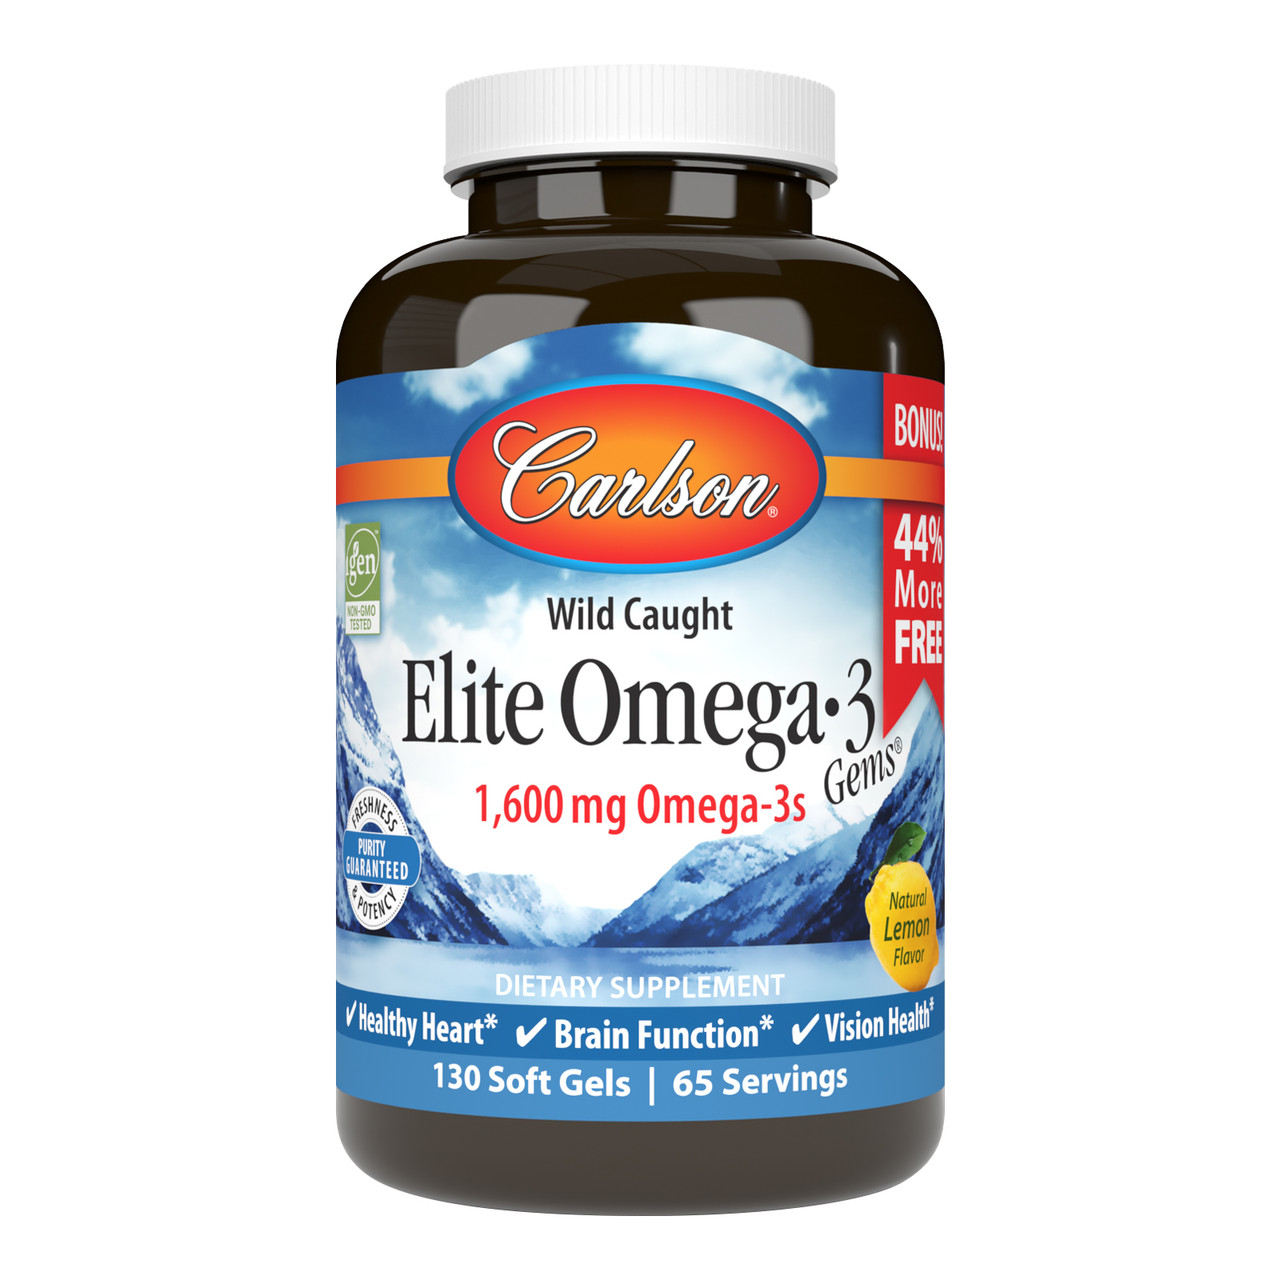 Elite Omega-3 Gems, The Professional Strength Fish Oil